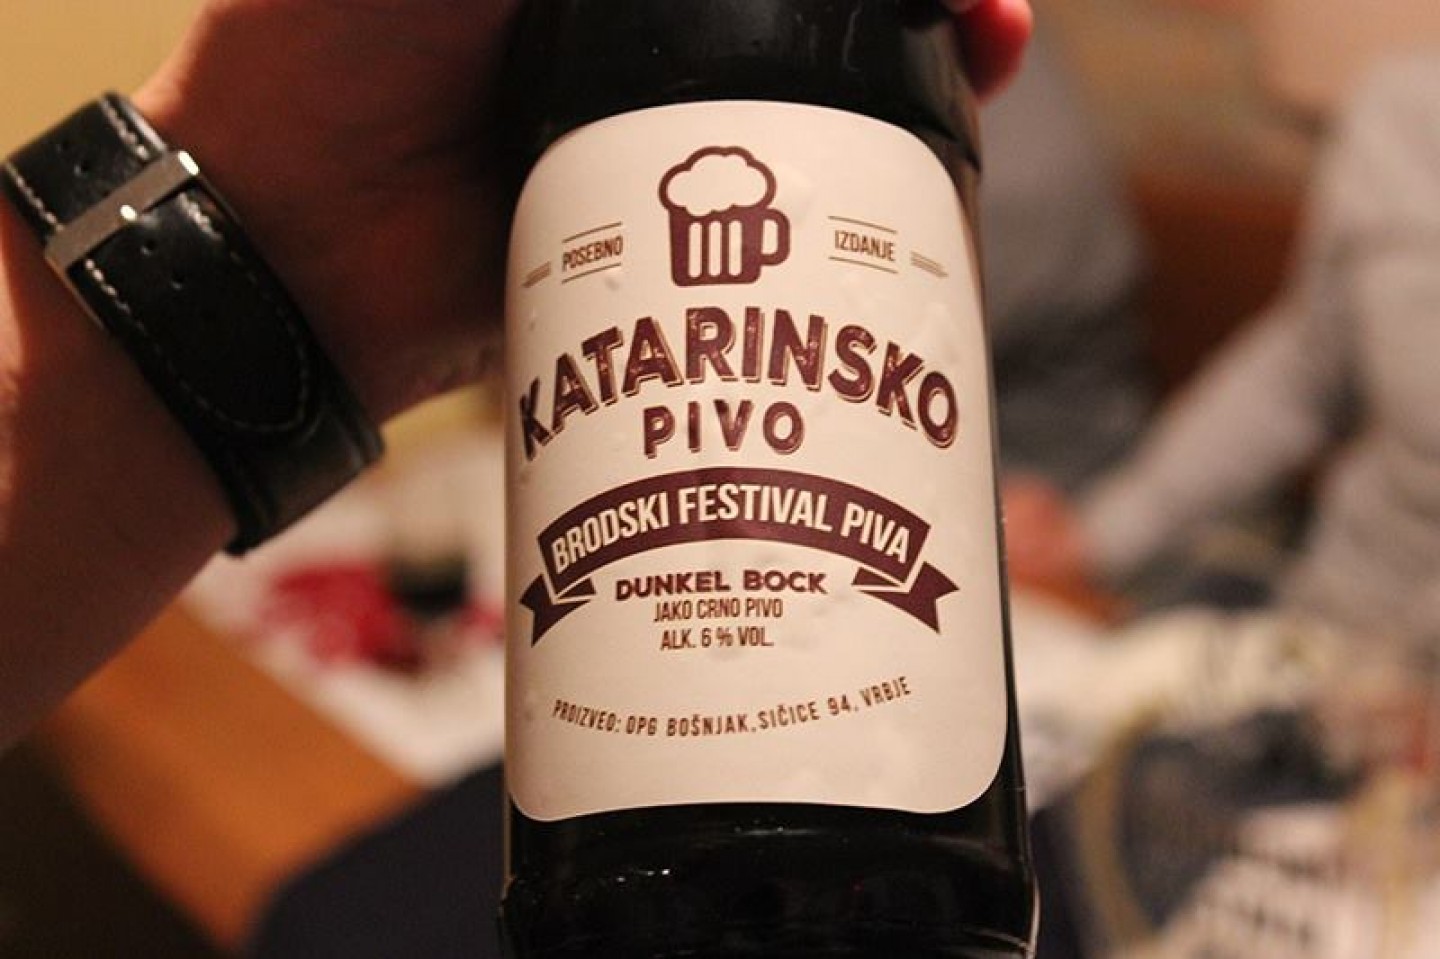 Katarinsko pivo na prvom Brodskom festivalu piva